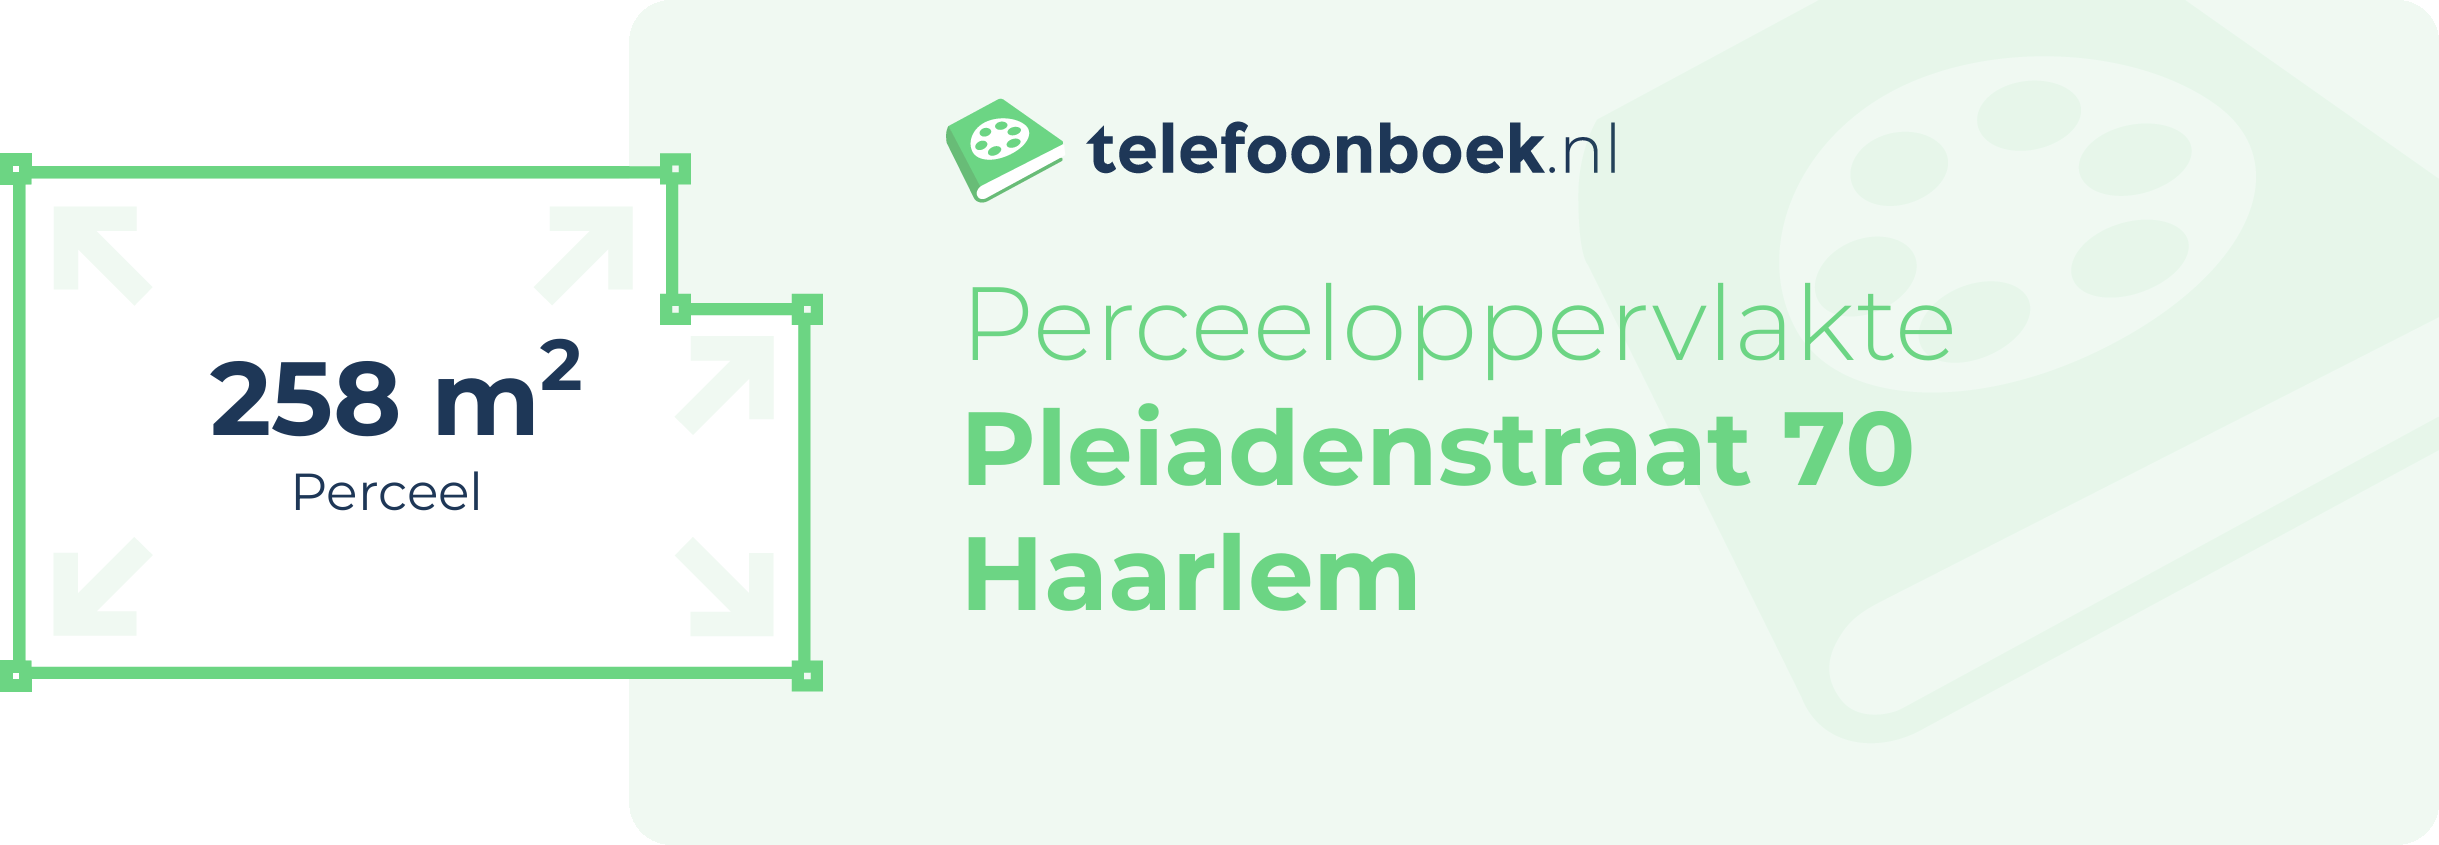 Perceeloppervlakte Pleiadenstraat 70 Haarlem